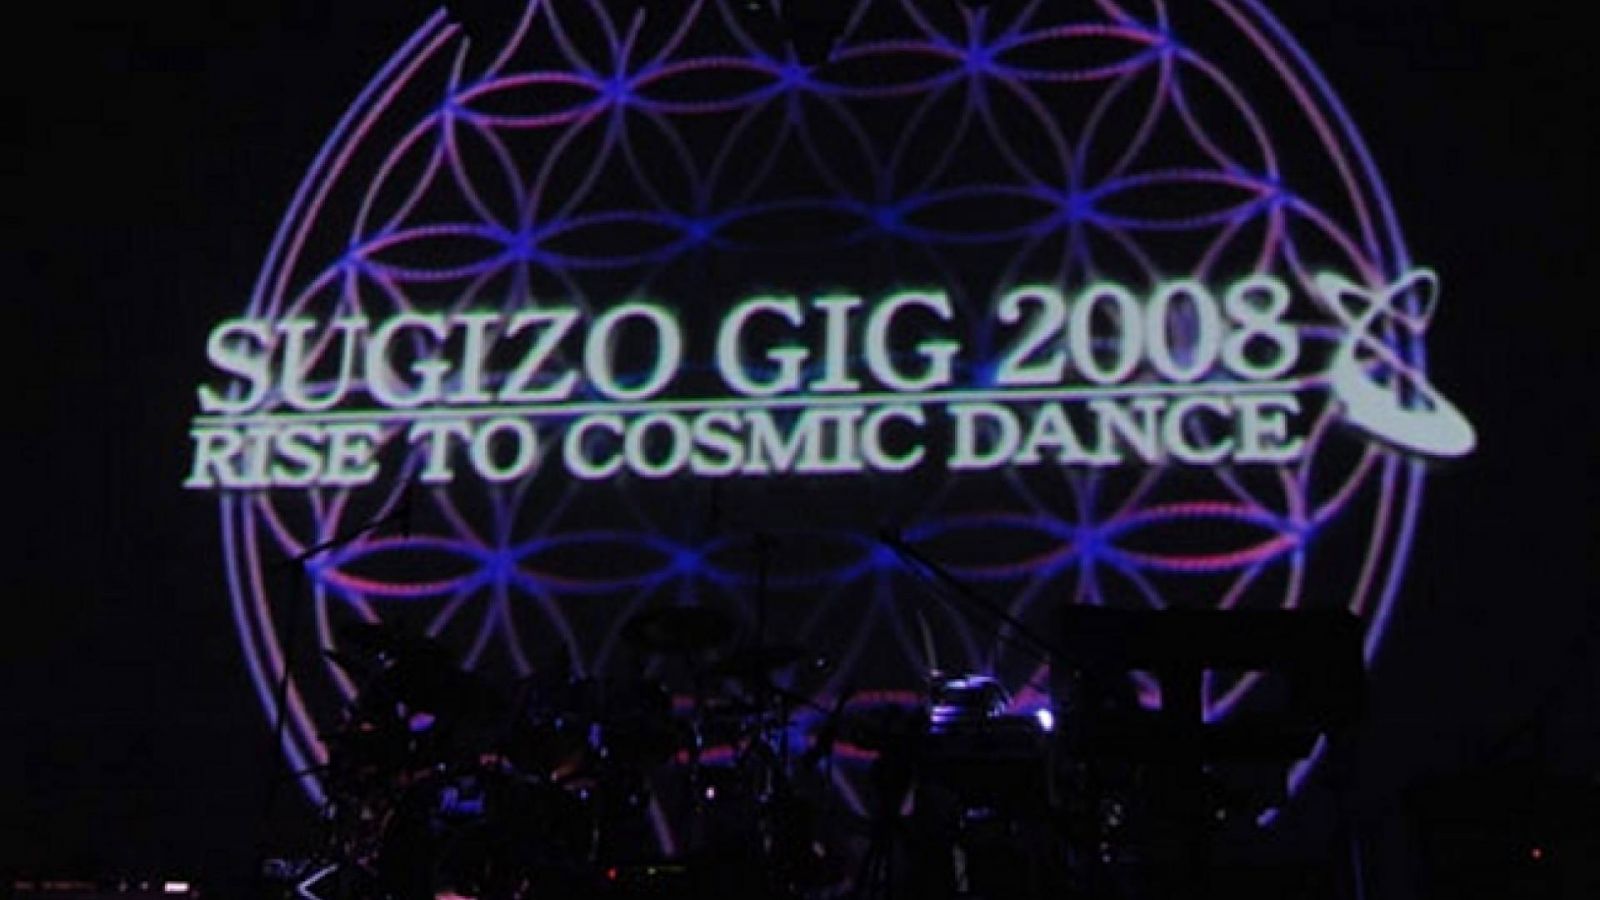 SUGIZO GIG 2008 ~RISE TO COSMIC DANCE~ © SUGIZO